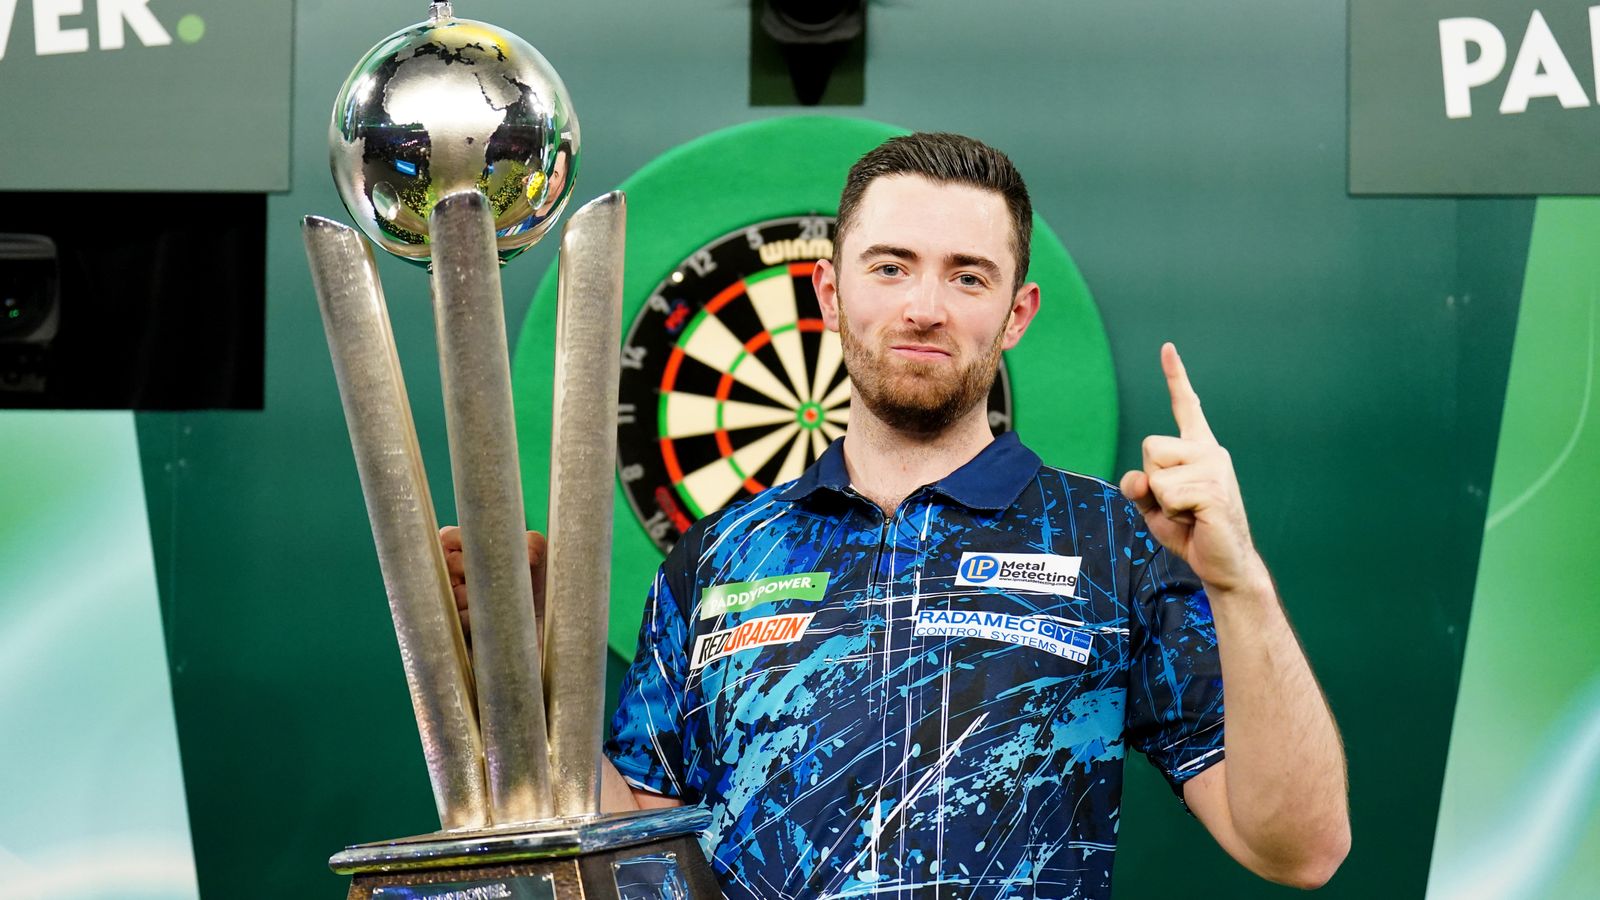 'I feel on top of the world', says world darts champion Luke Humphries